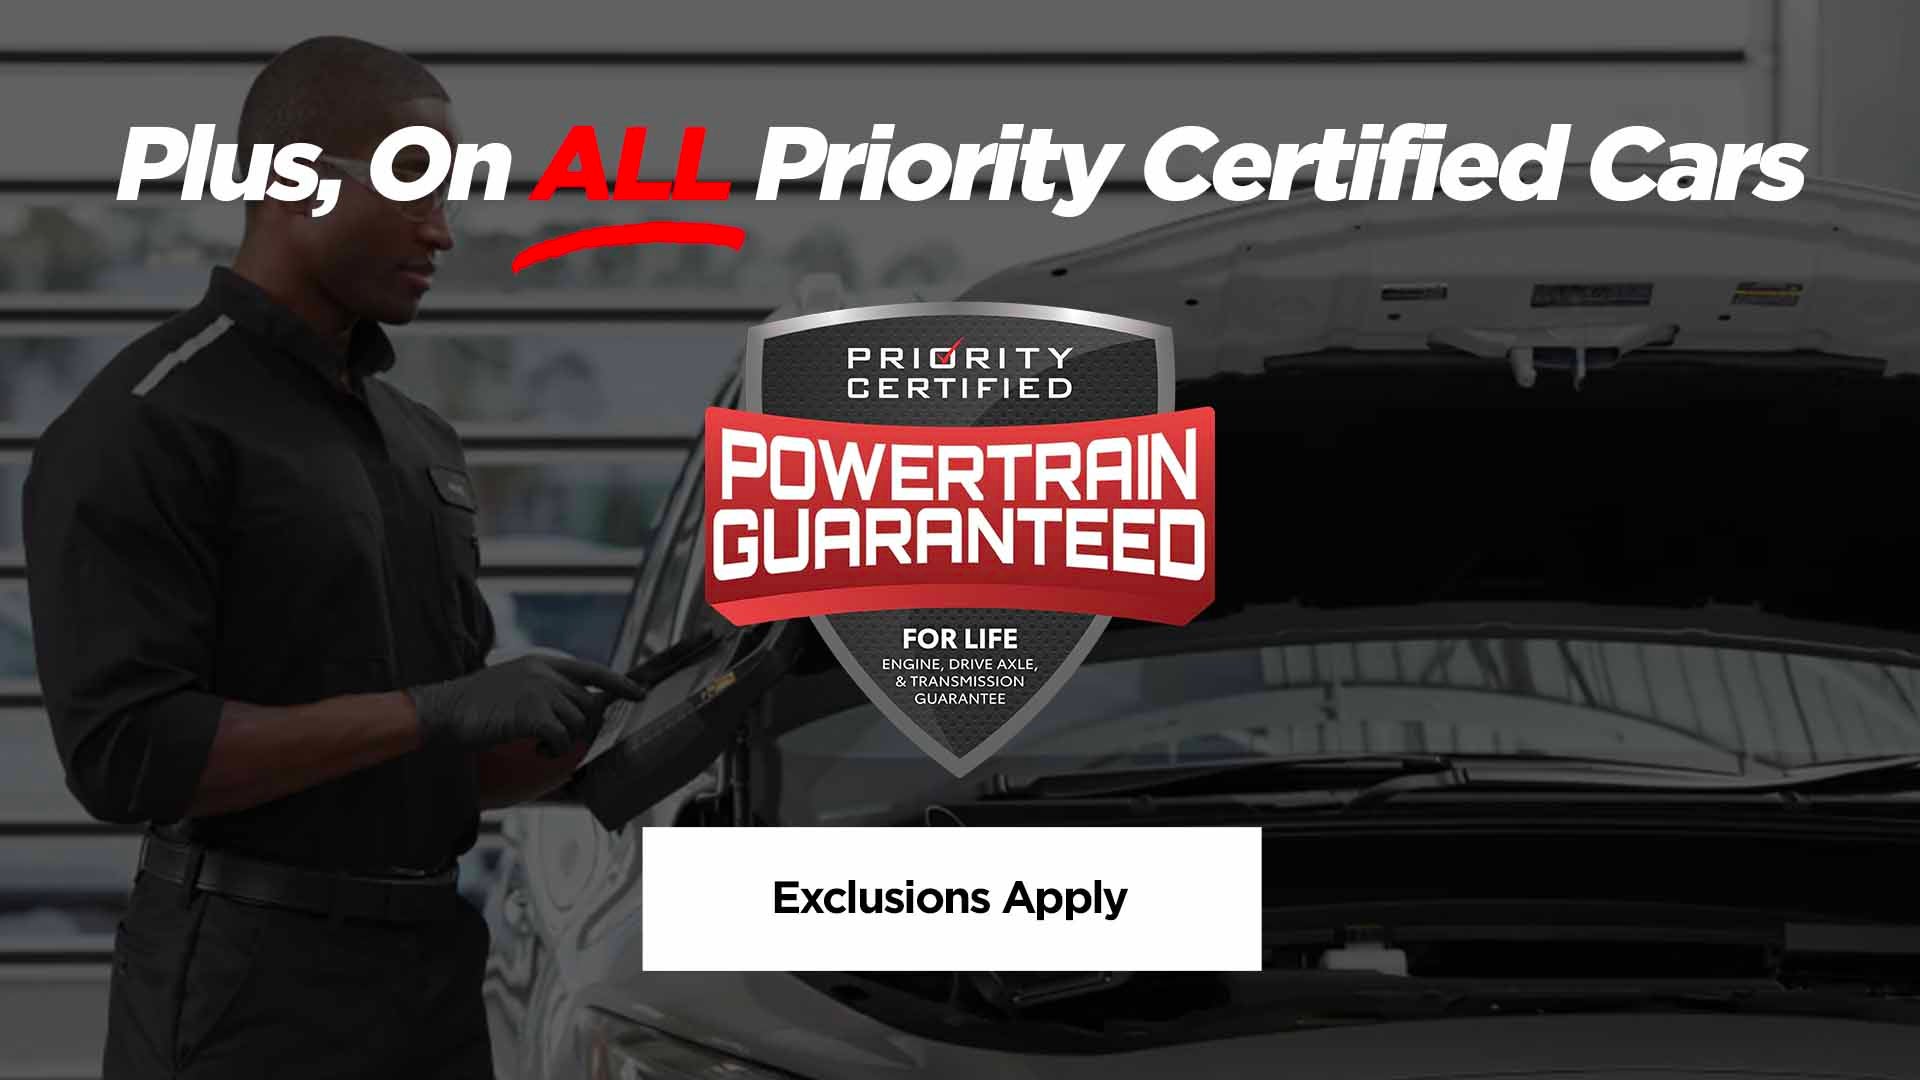 Priority Honda Chesapeake in Chesapeake VA, Powertrain Guaranteed on Priority Certified Cars*